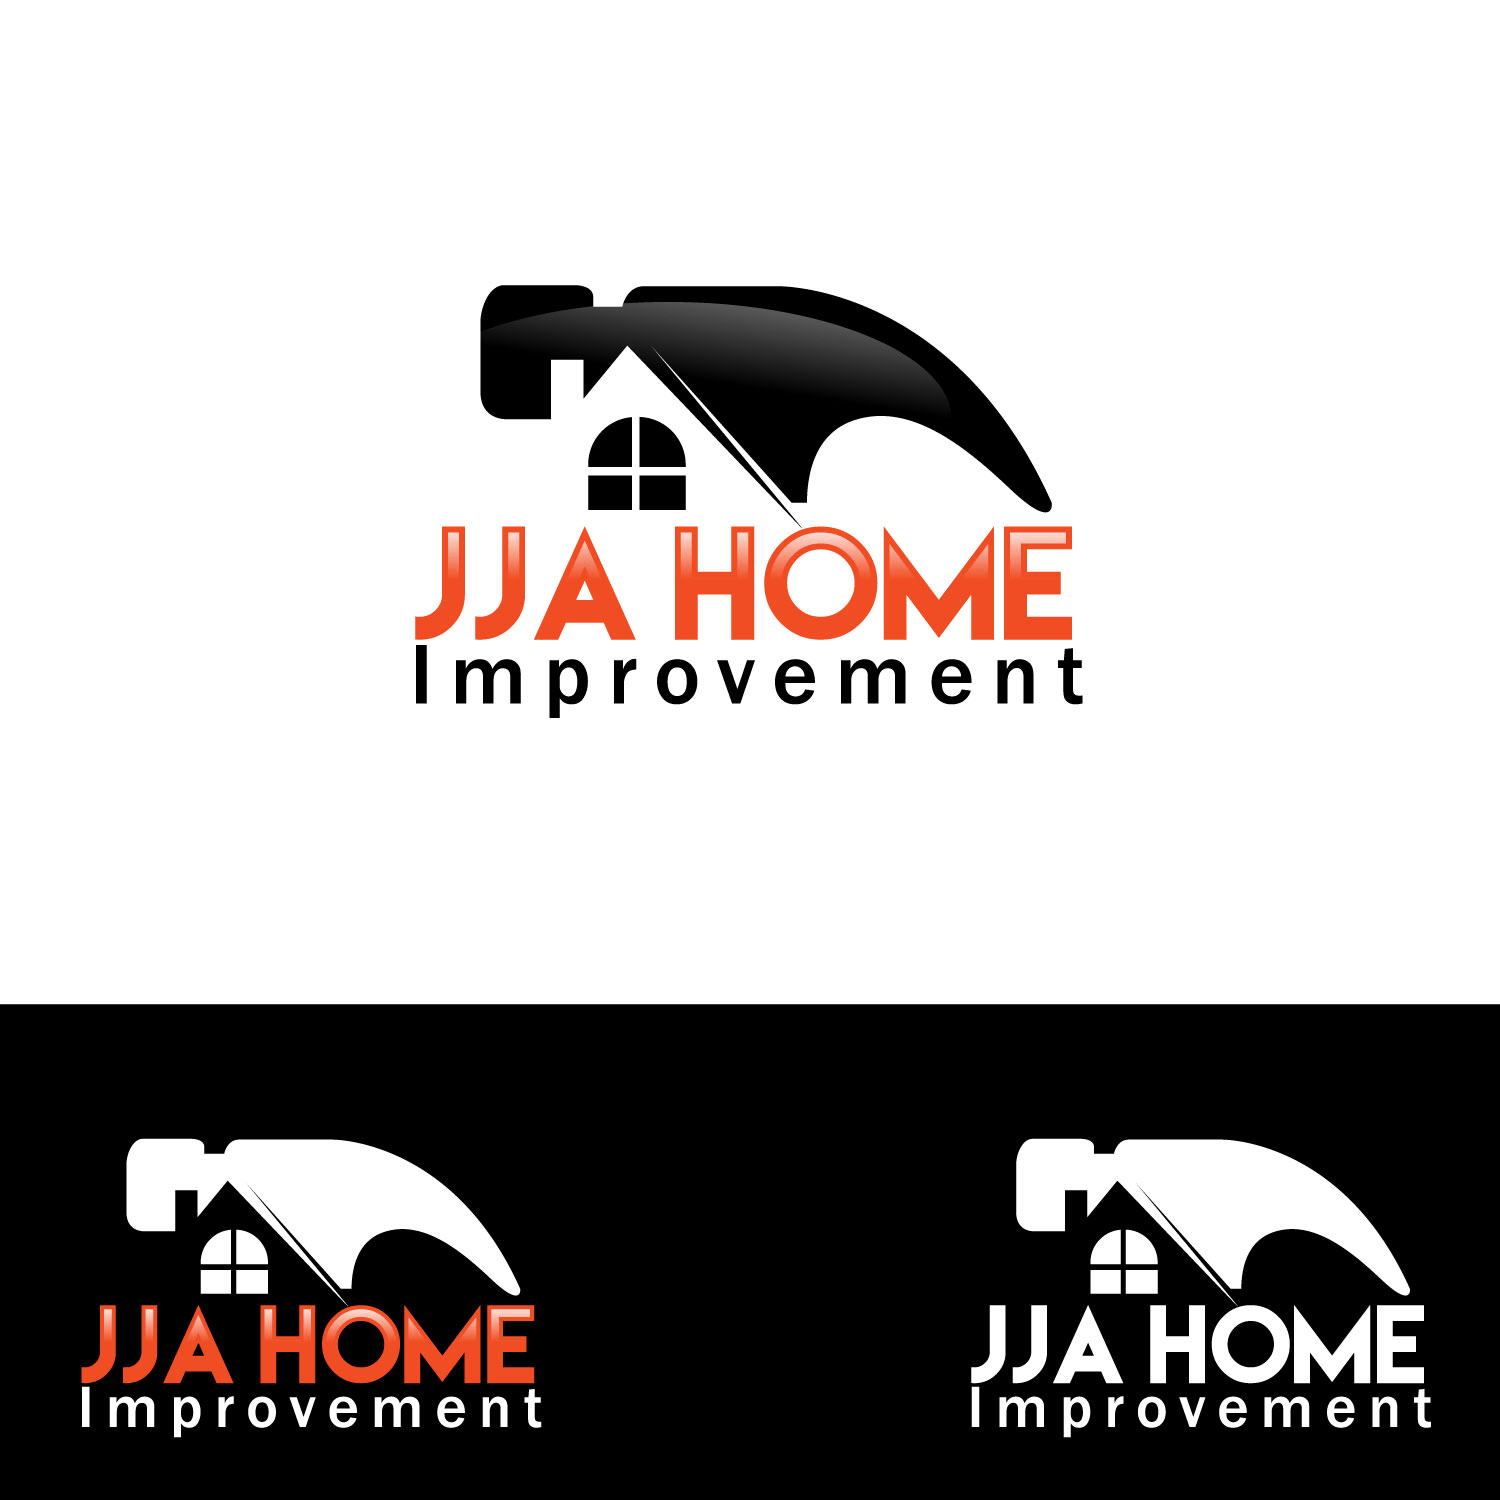 Home Improvement Logo - Logo Design Contests » JJA Home Improvement Logo Design ...